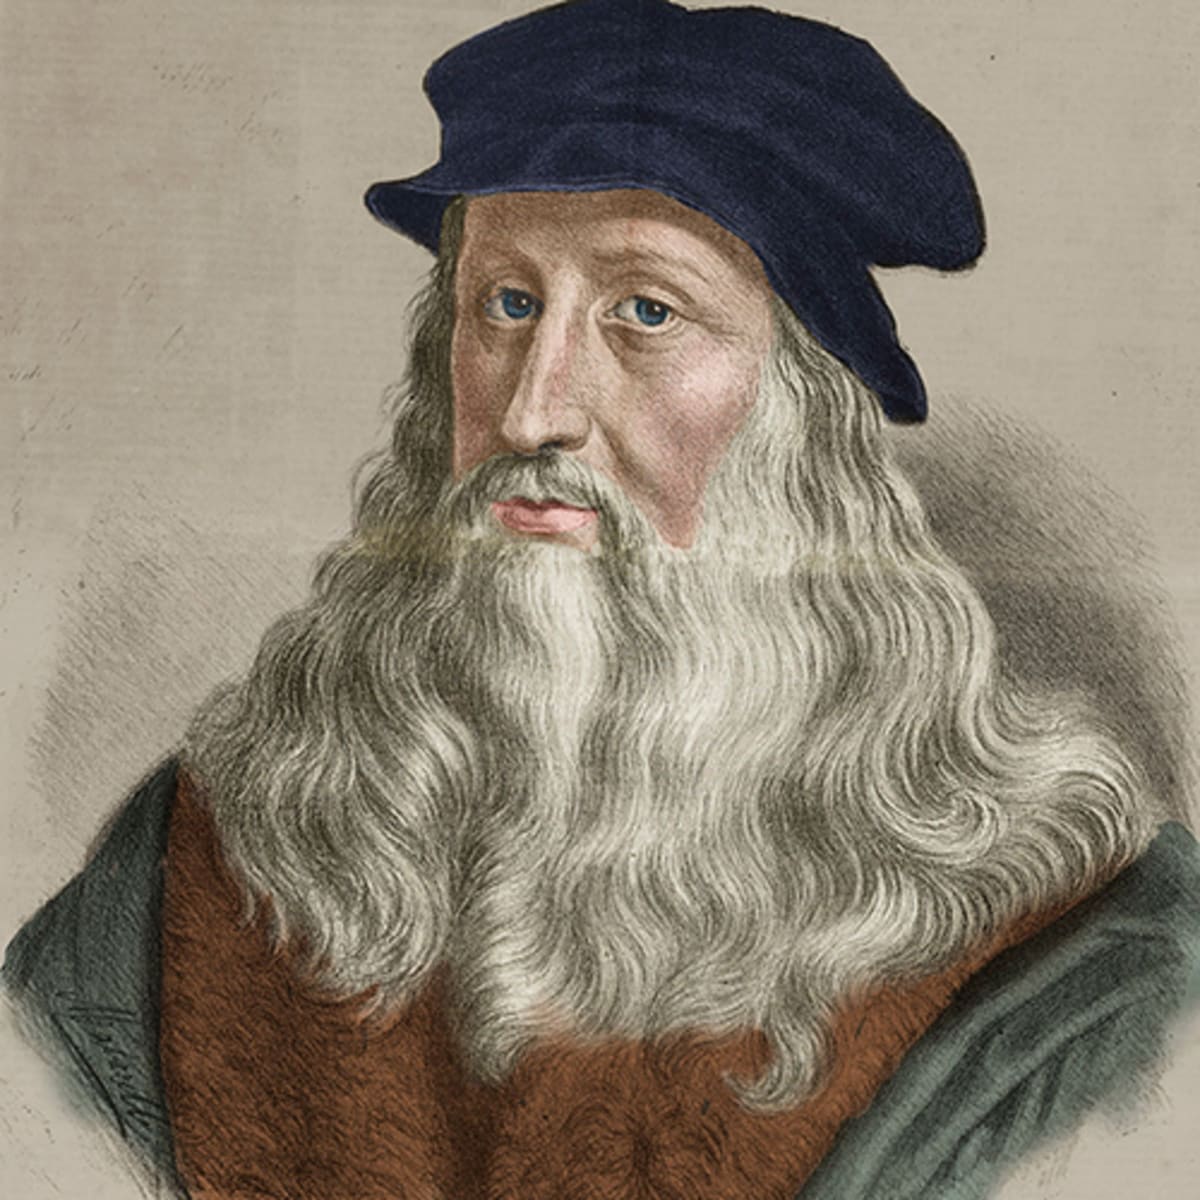 portrait-of-leonardo-da-vinci-1452-1519-getty